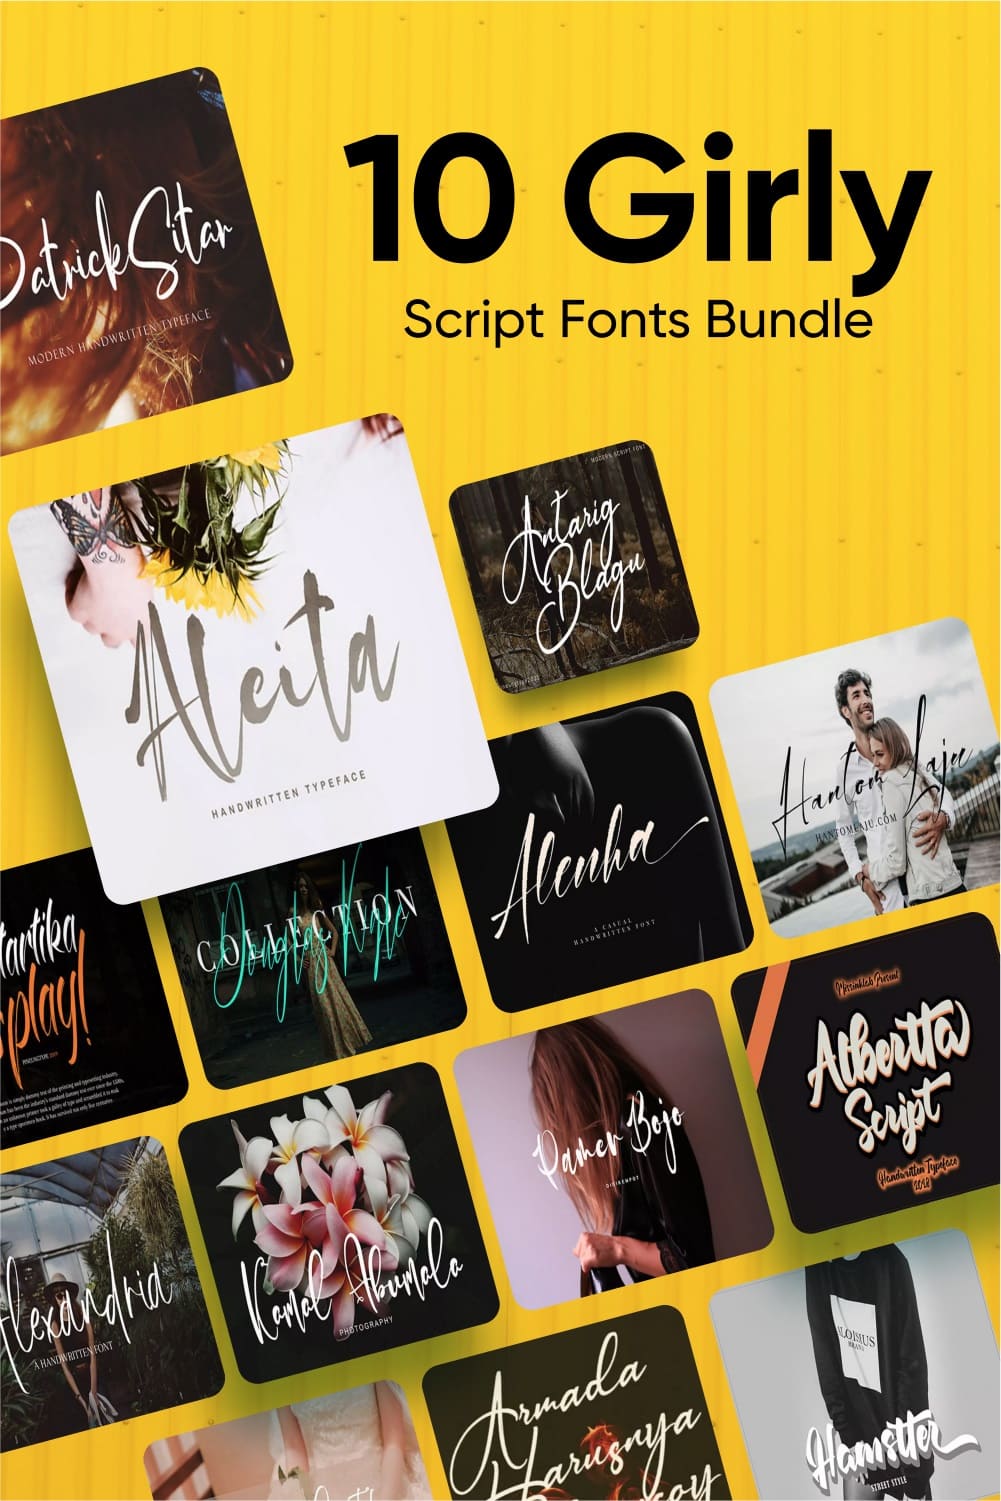 Girly script fonts bundle Pinterest preview by MasterBundles.